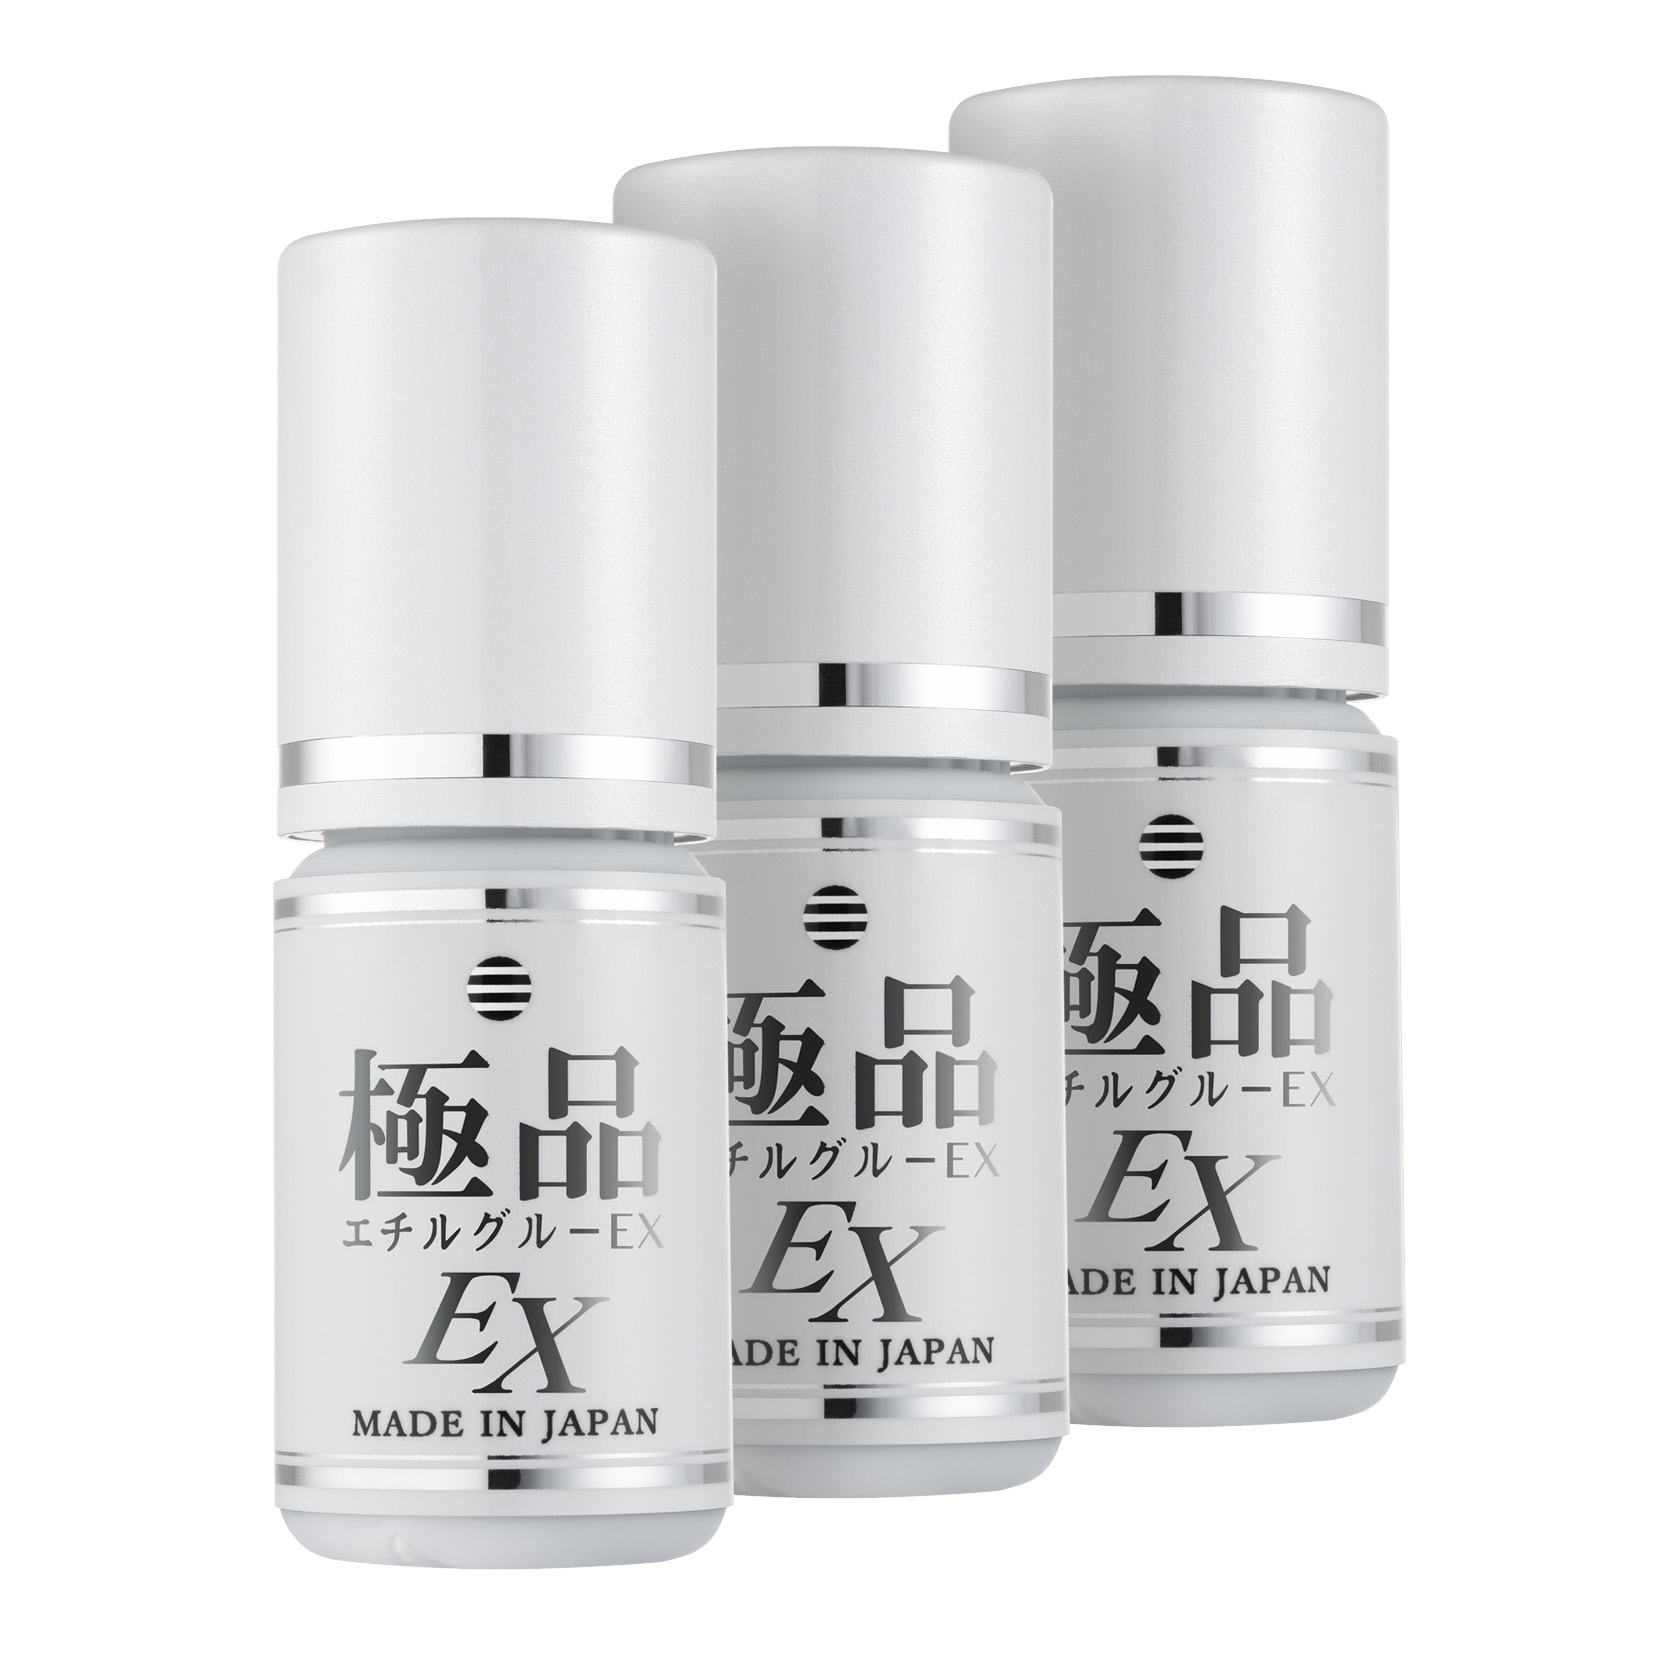 [Beauty Lash Japan] 極品 EX 黑膠 3入組合一瓶$880